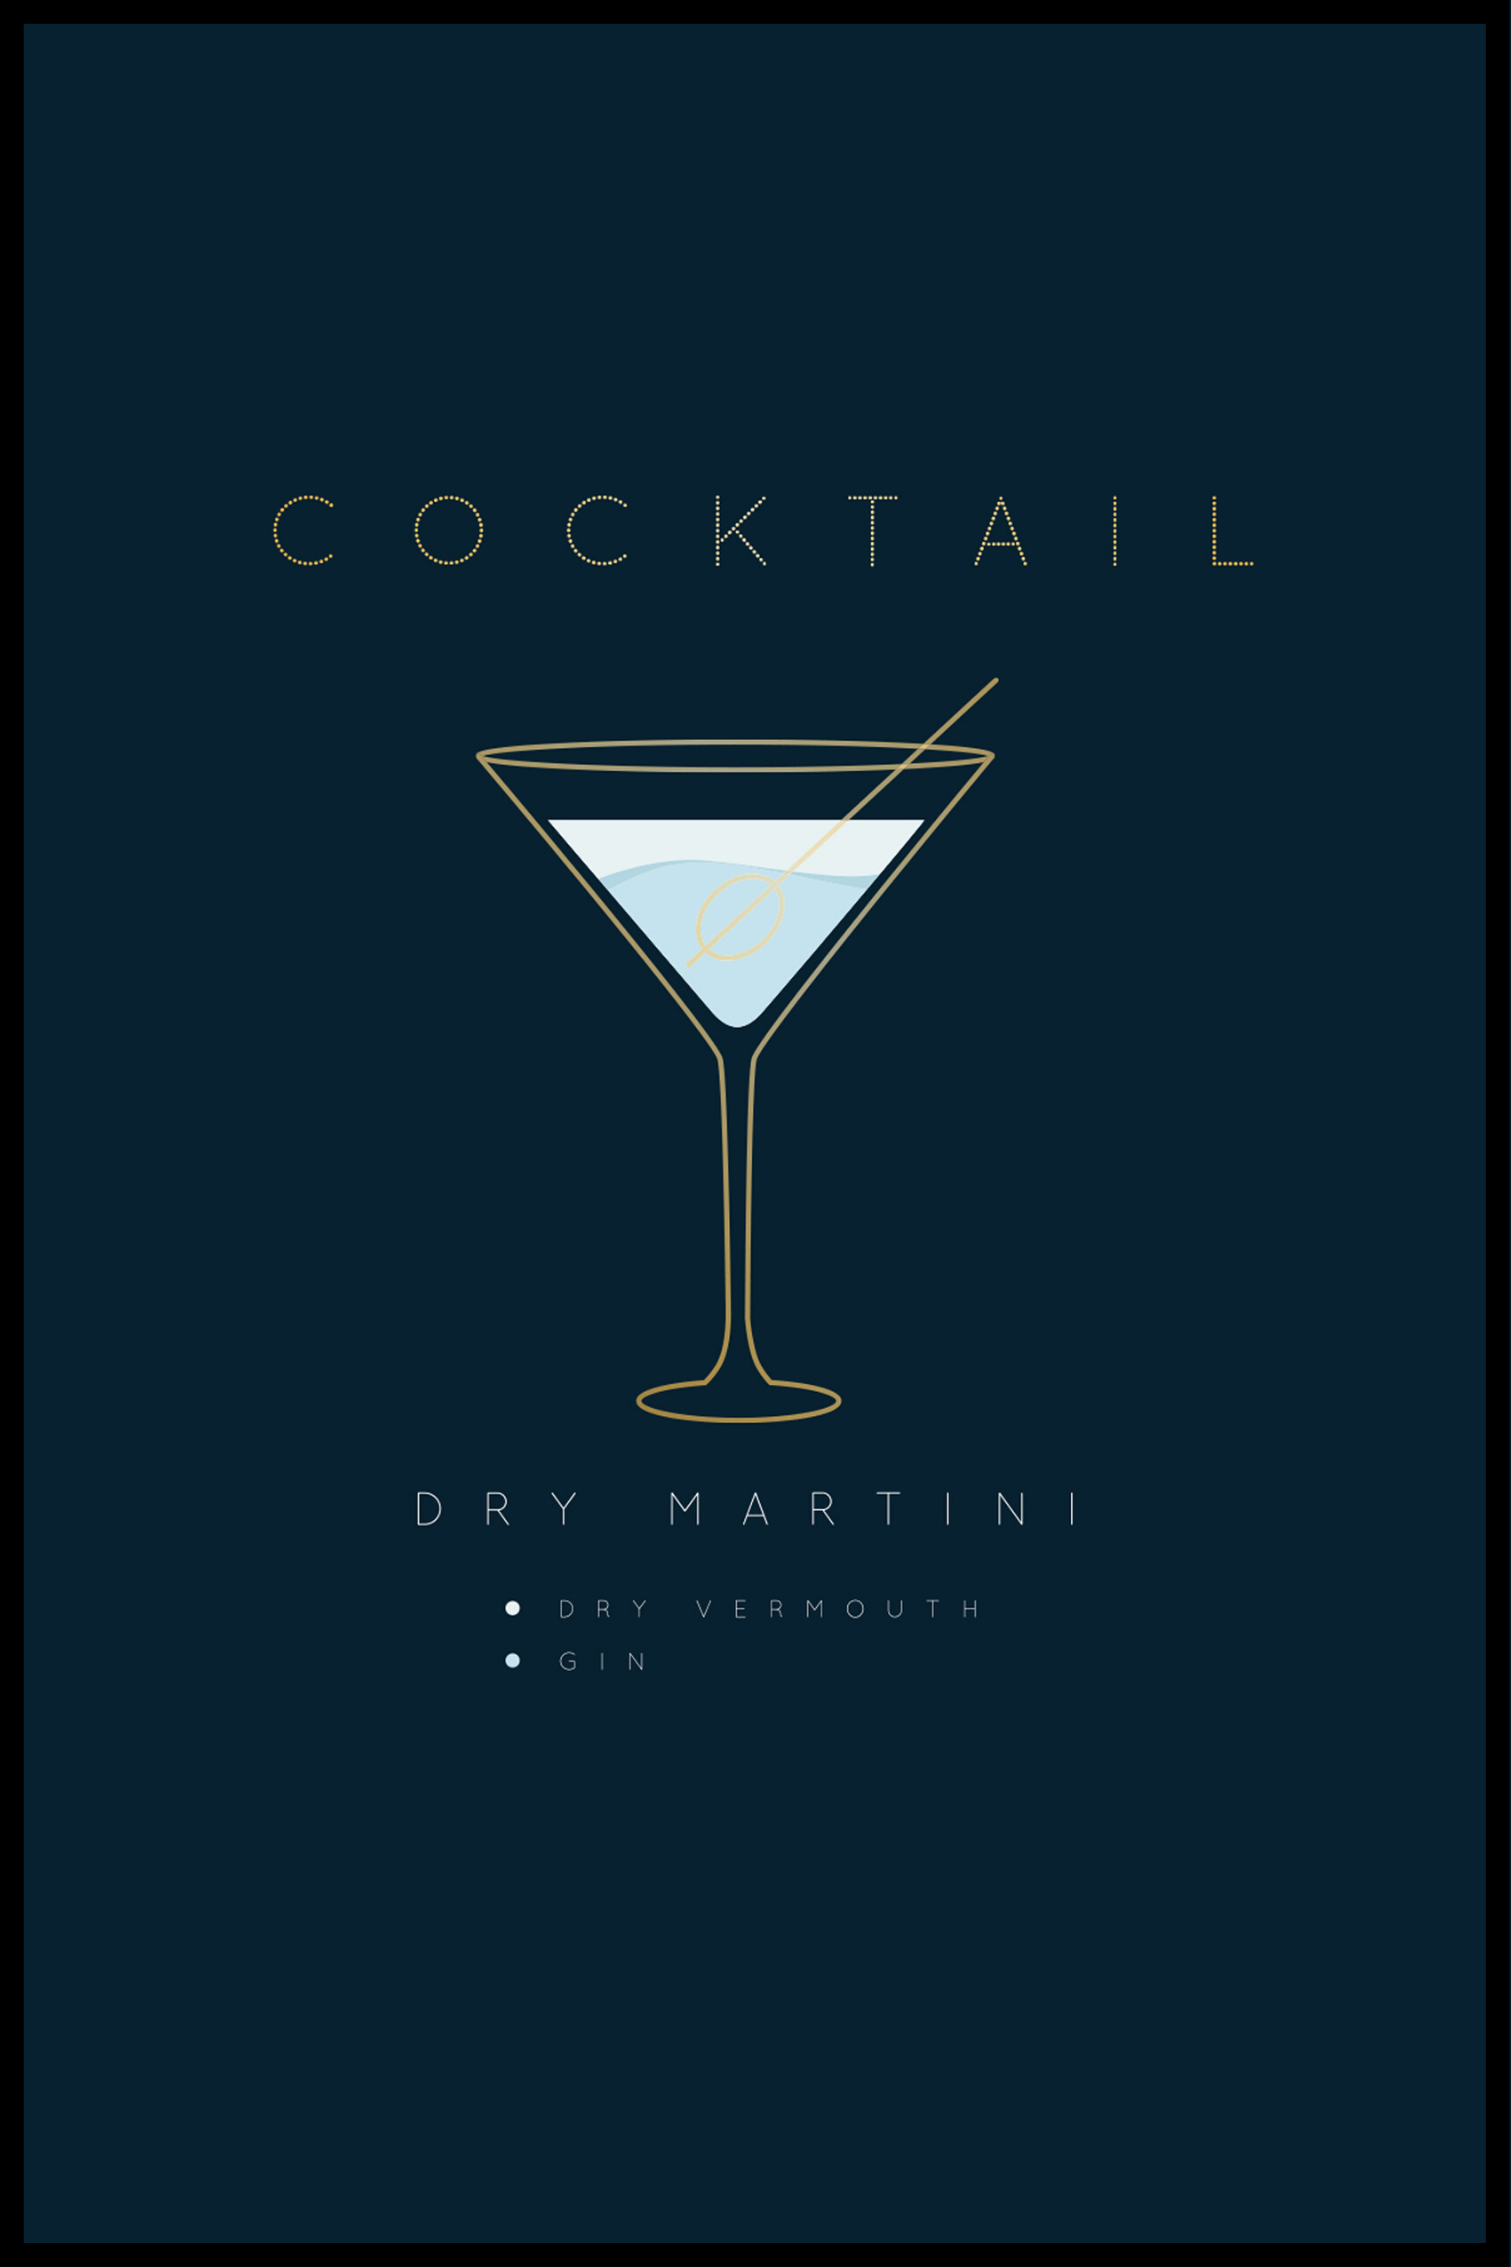 dry martini drink affisch